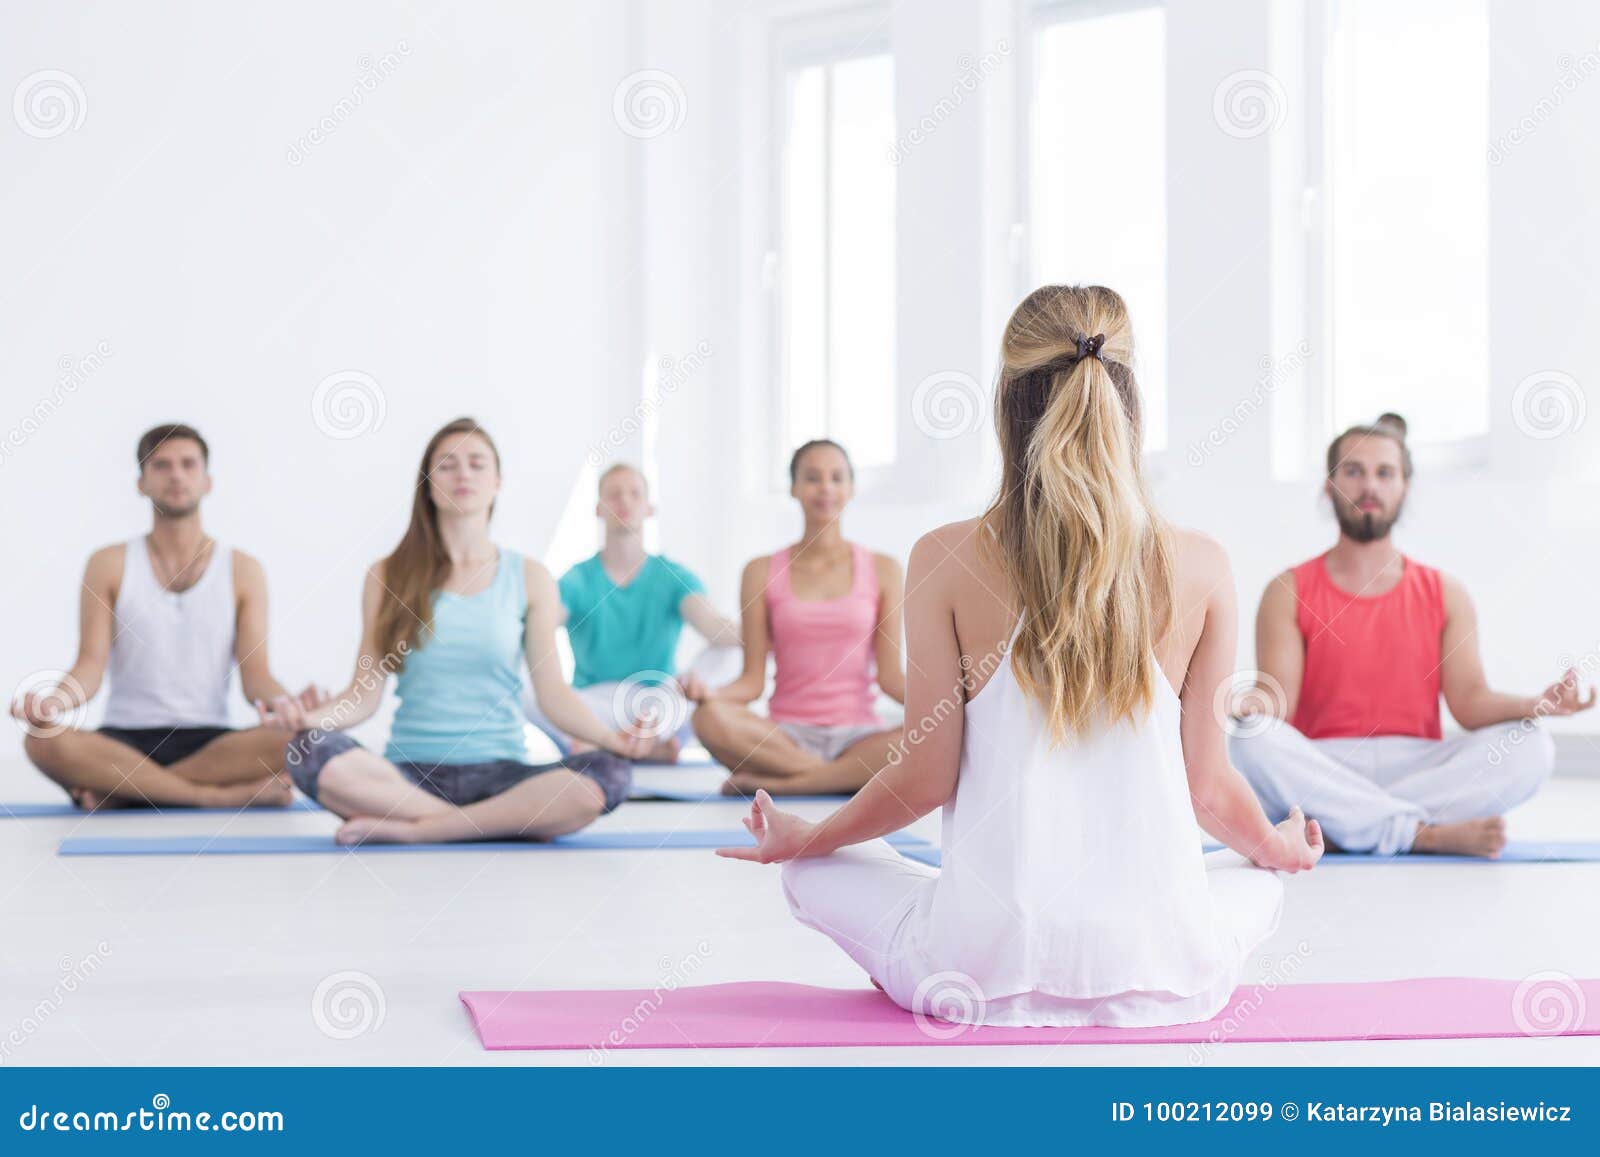 yoga instructor in studio